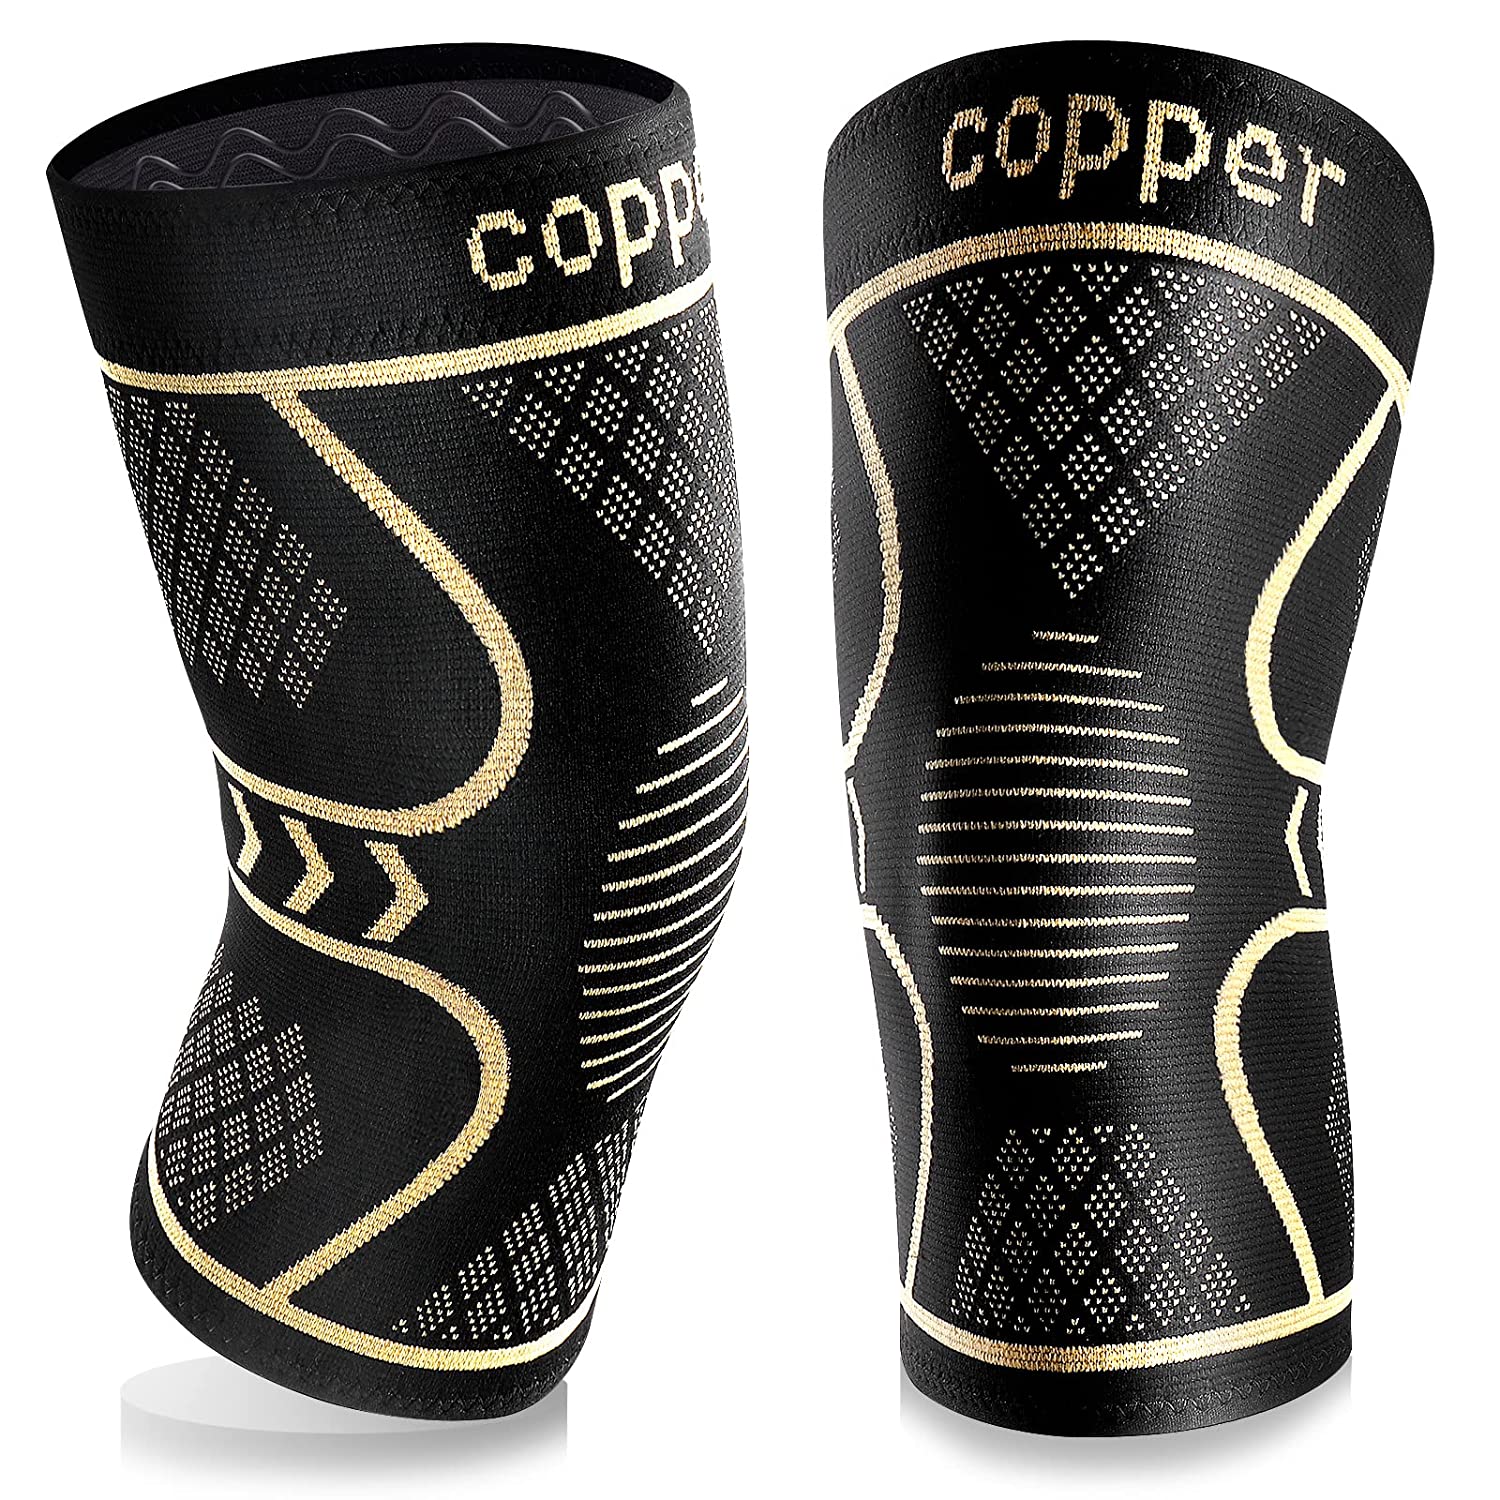 Copper Compression Shoulder Brace - Copper Infused Immobilizer & Support  for Torn Rotator Cuff 